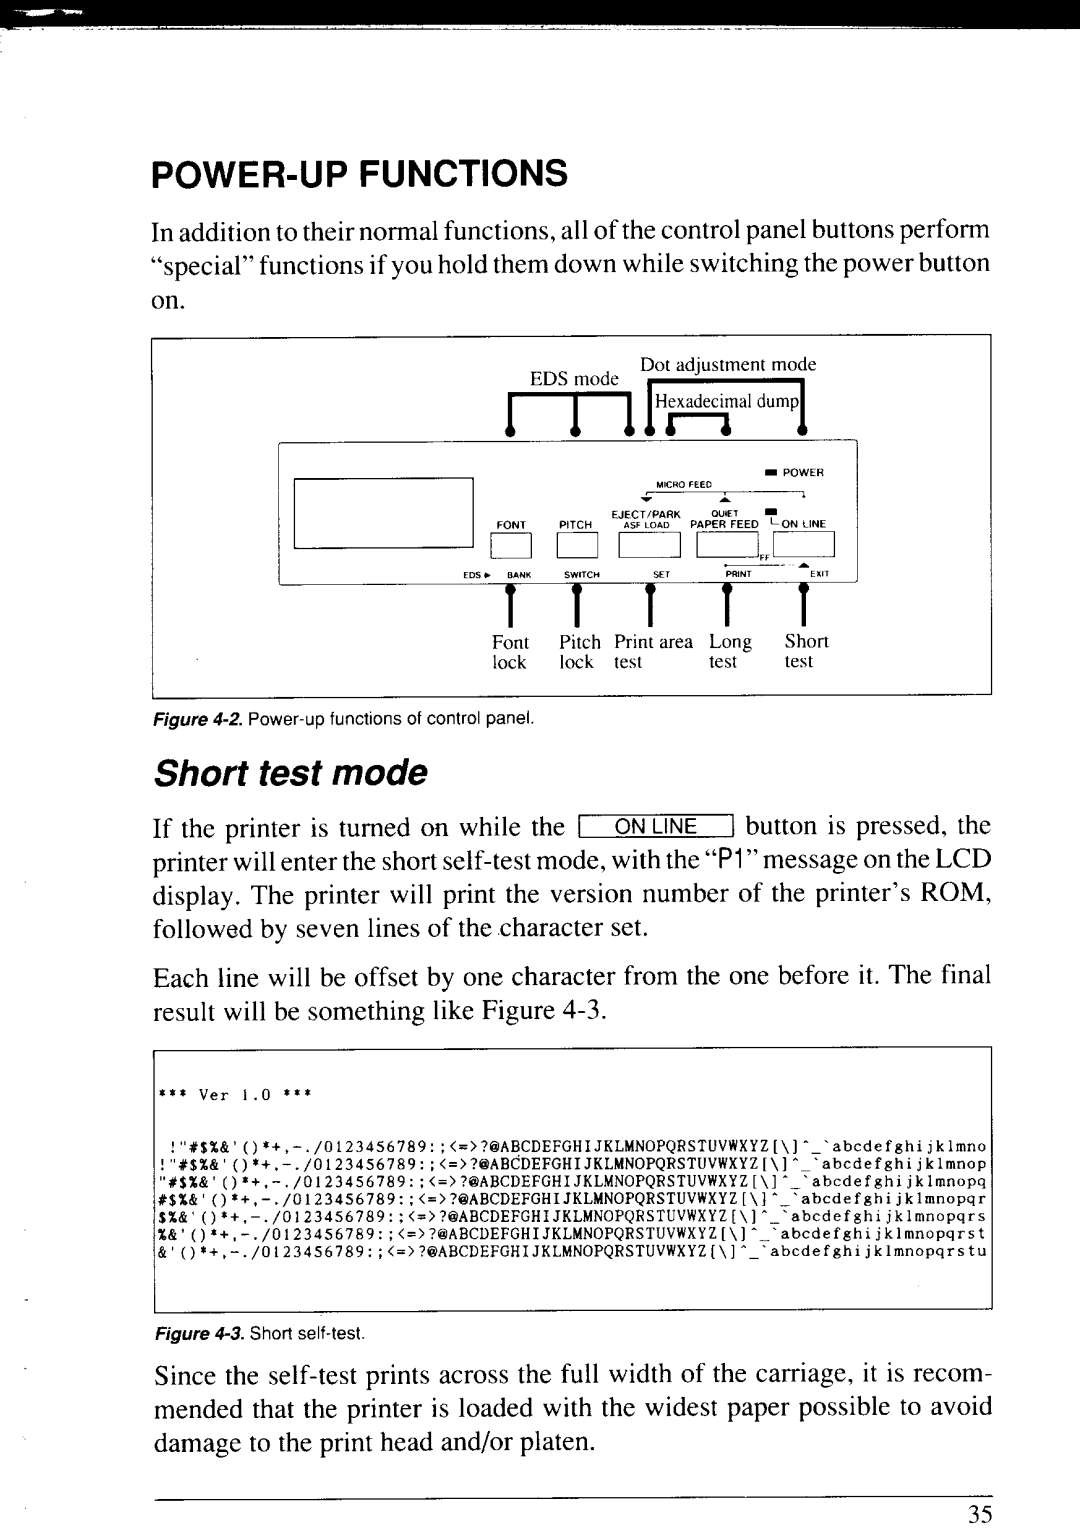 Star Micronics NX-2430 manual ~n‘0”’n““”‘J’’’’’’E’EED70NLDn n,,= -- A, Power-Up Functions, Short test mode 